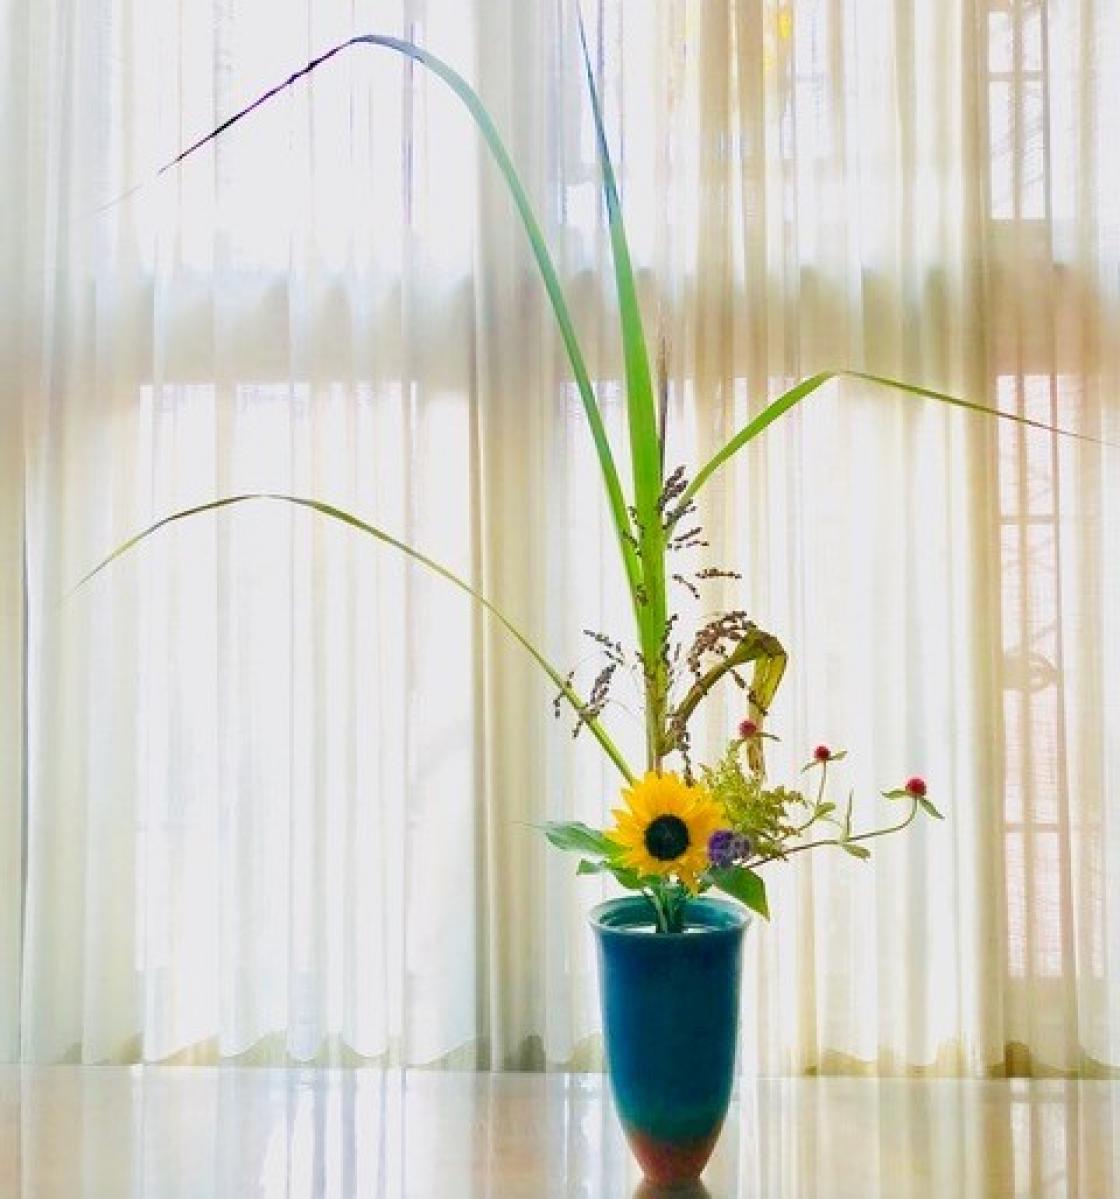 Photograph of an ikebena floral arrangement